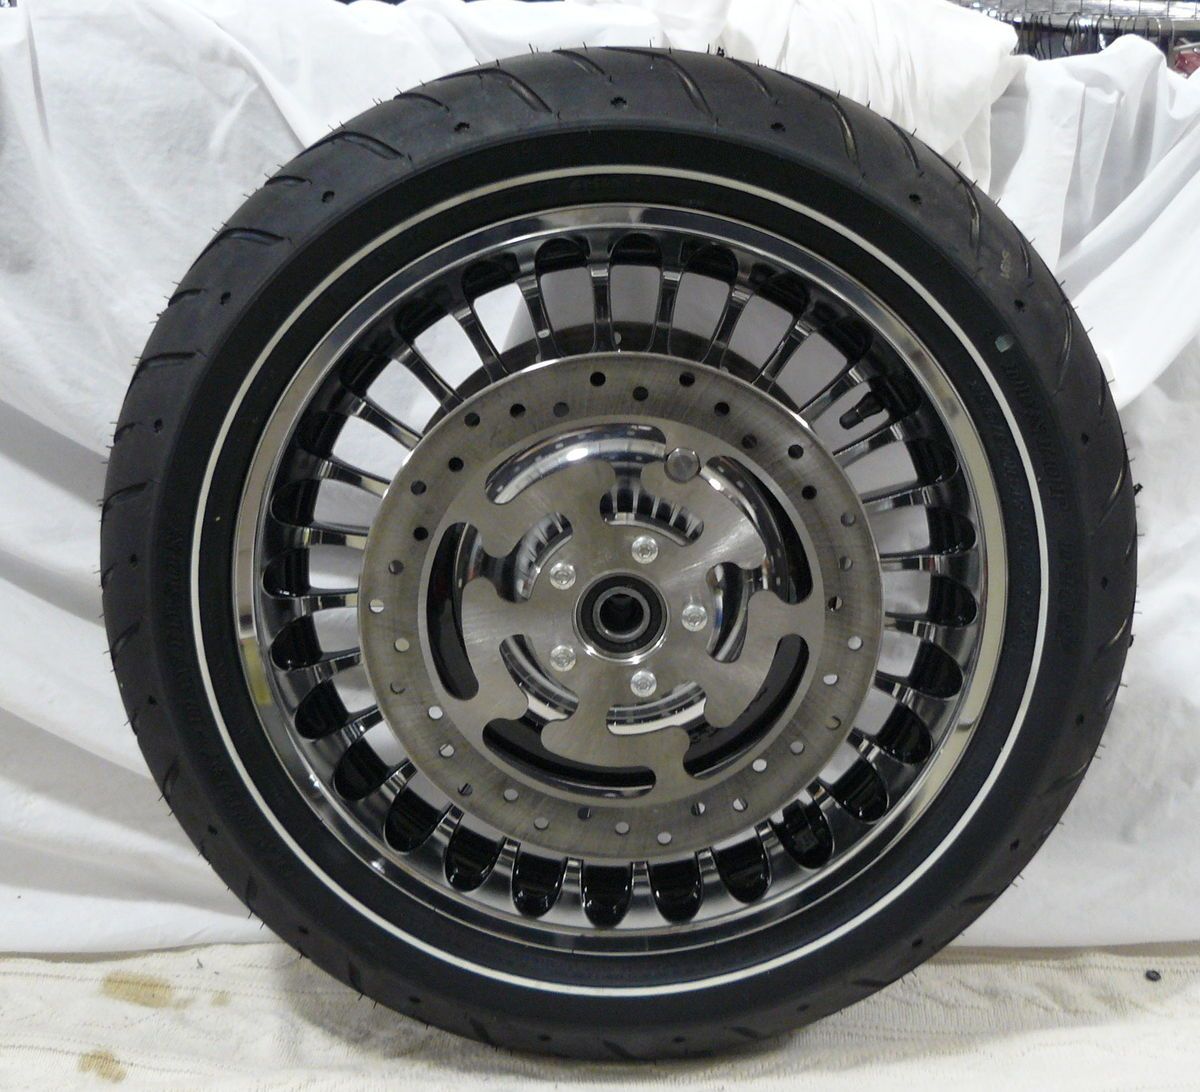 Harley Davidson Touring 28 Spoke Chrome Wheels Tires Stock Take Offs